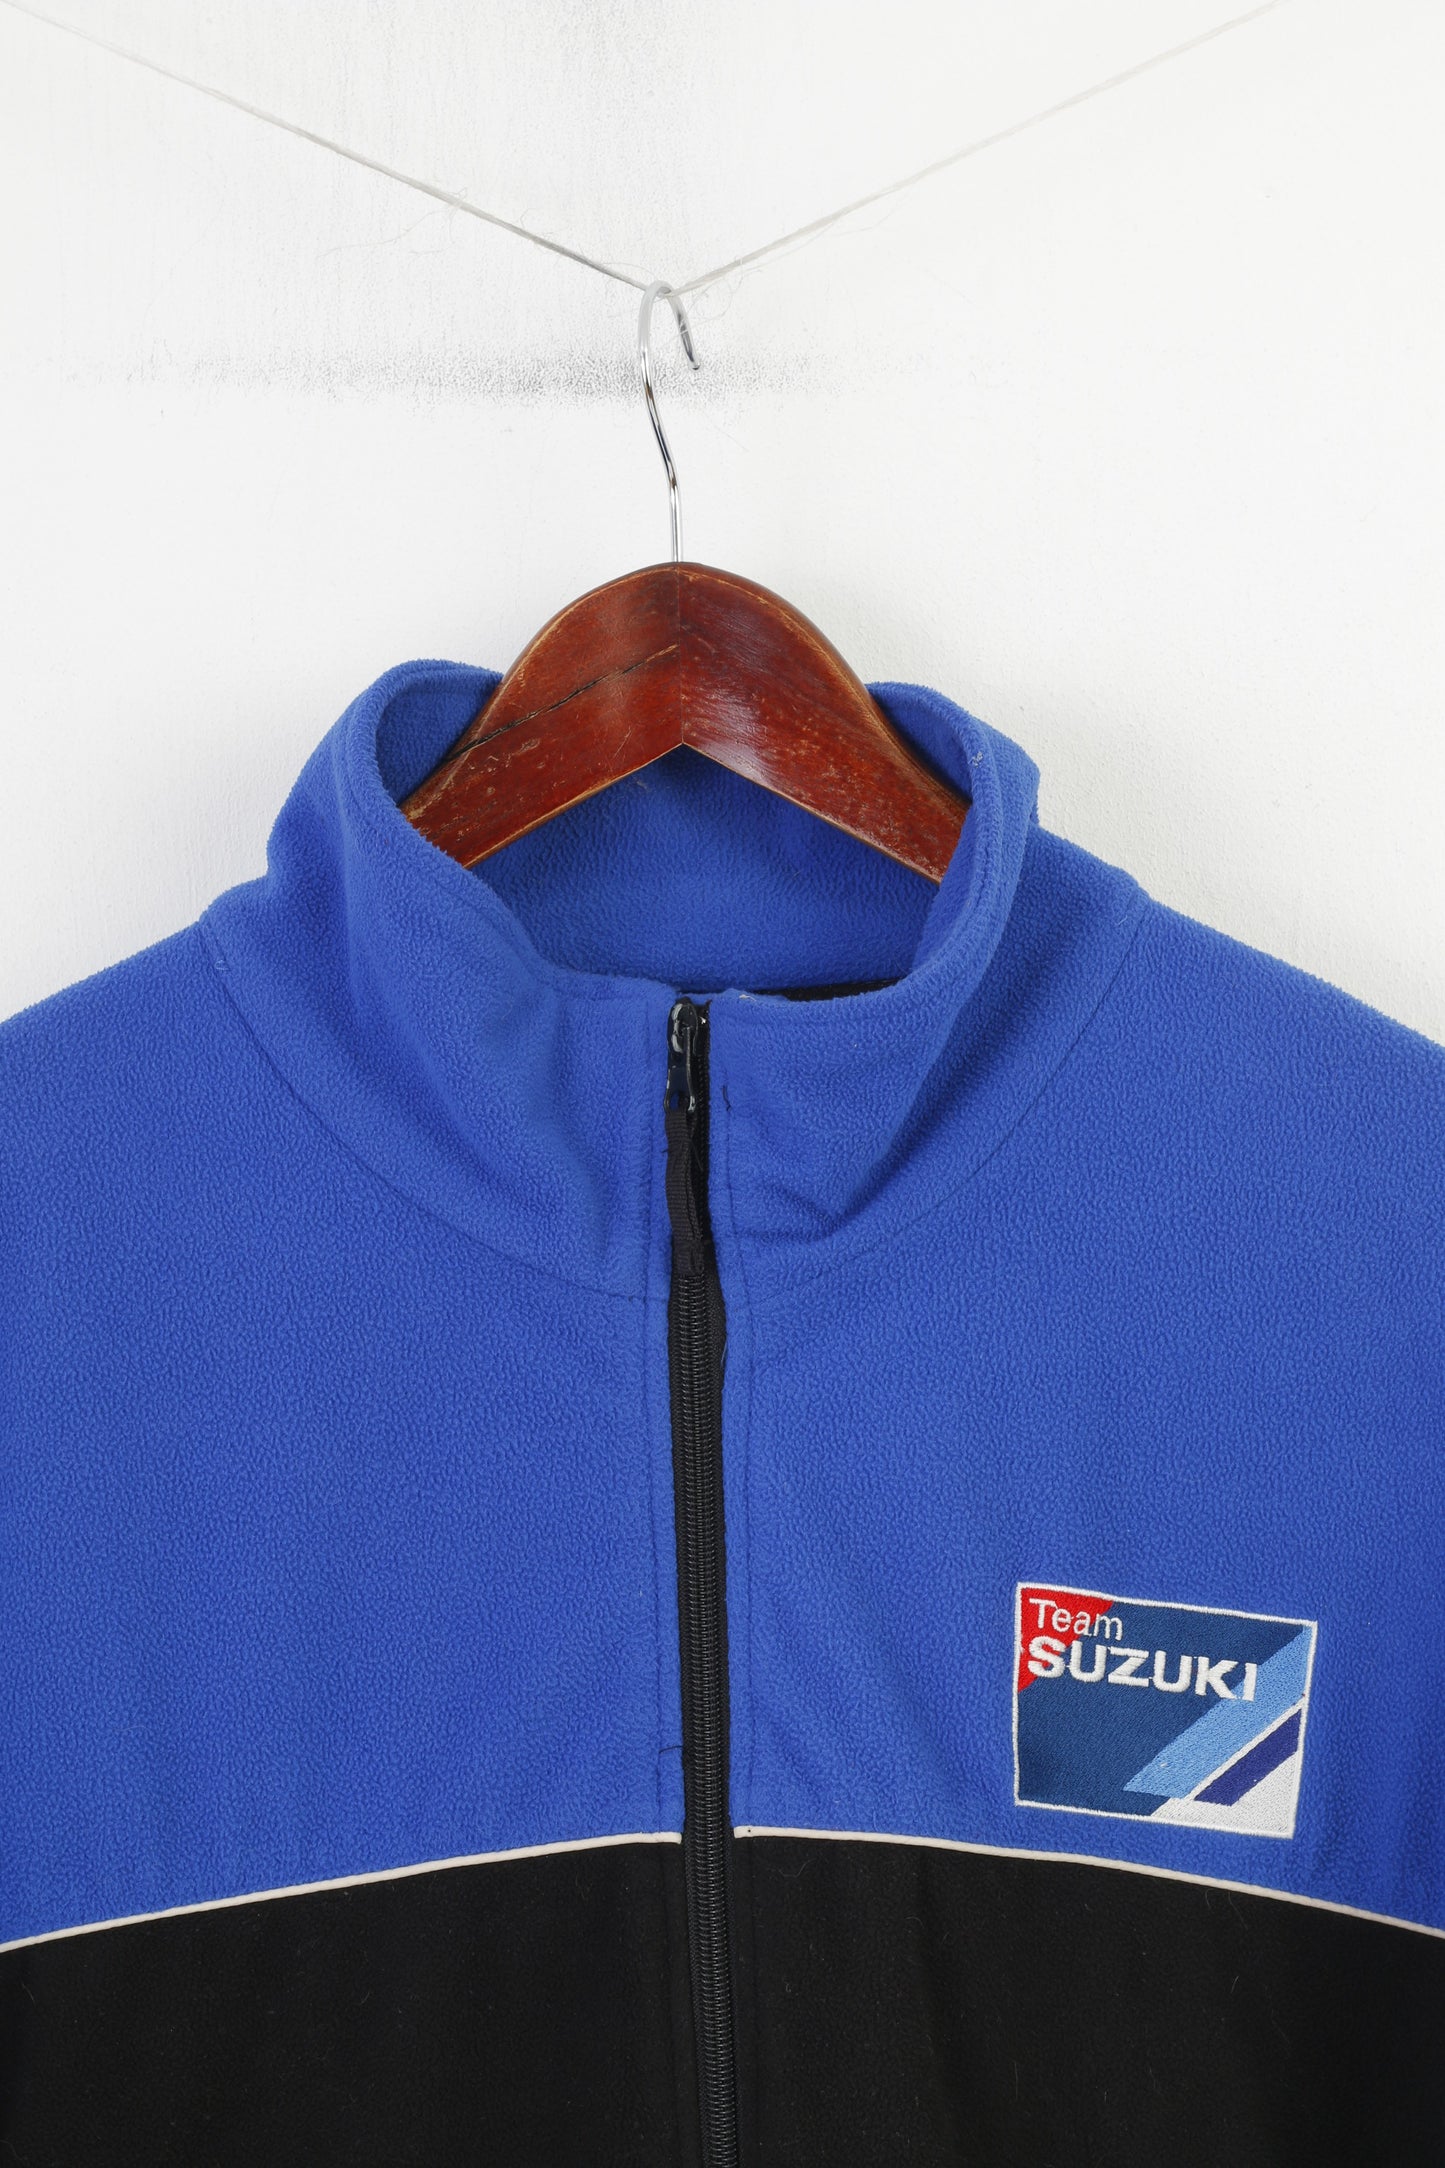 Suzuki Men XL Fleece Jacket Blue Vintage Race Full Zipper Team Cars Automotive Vintage Top